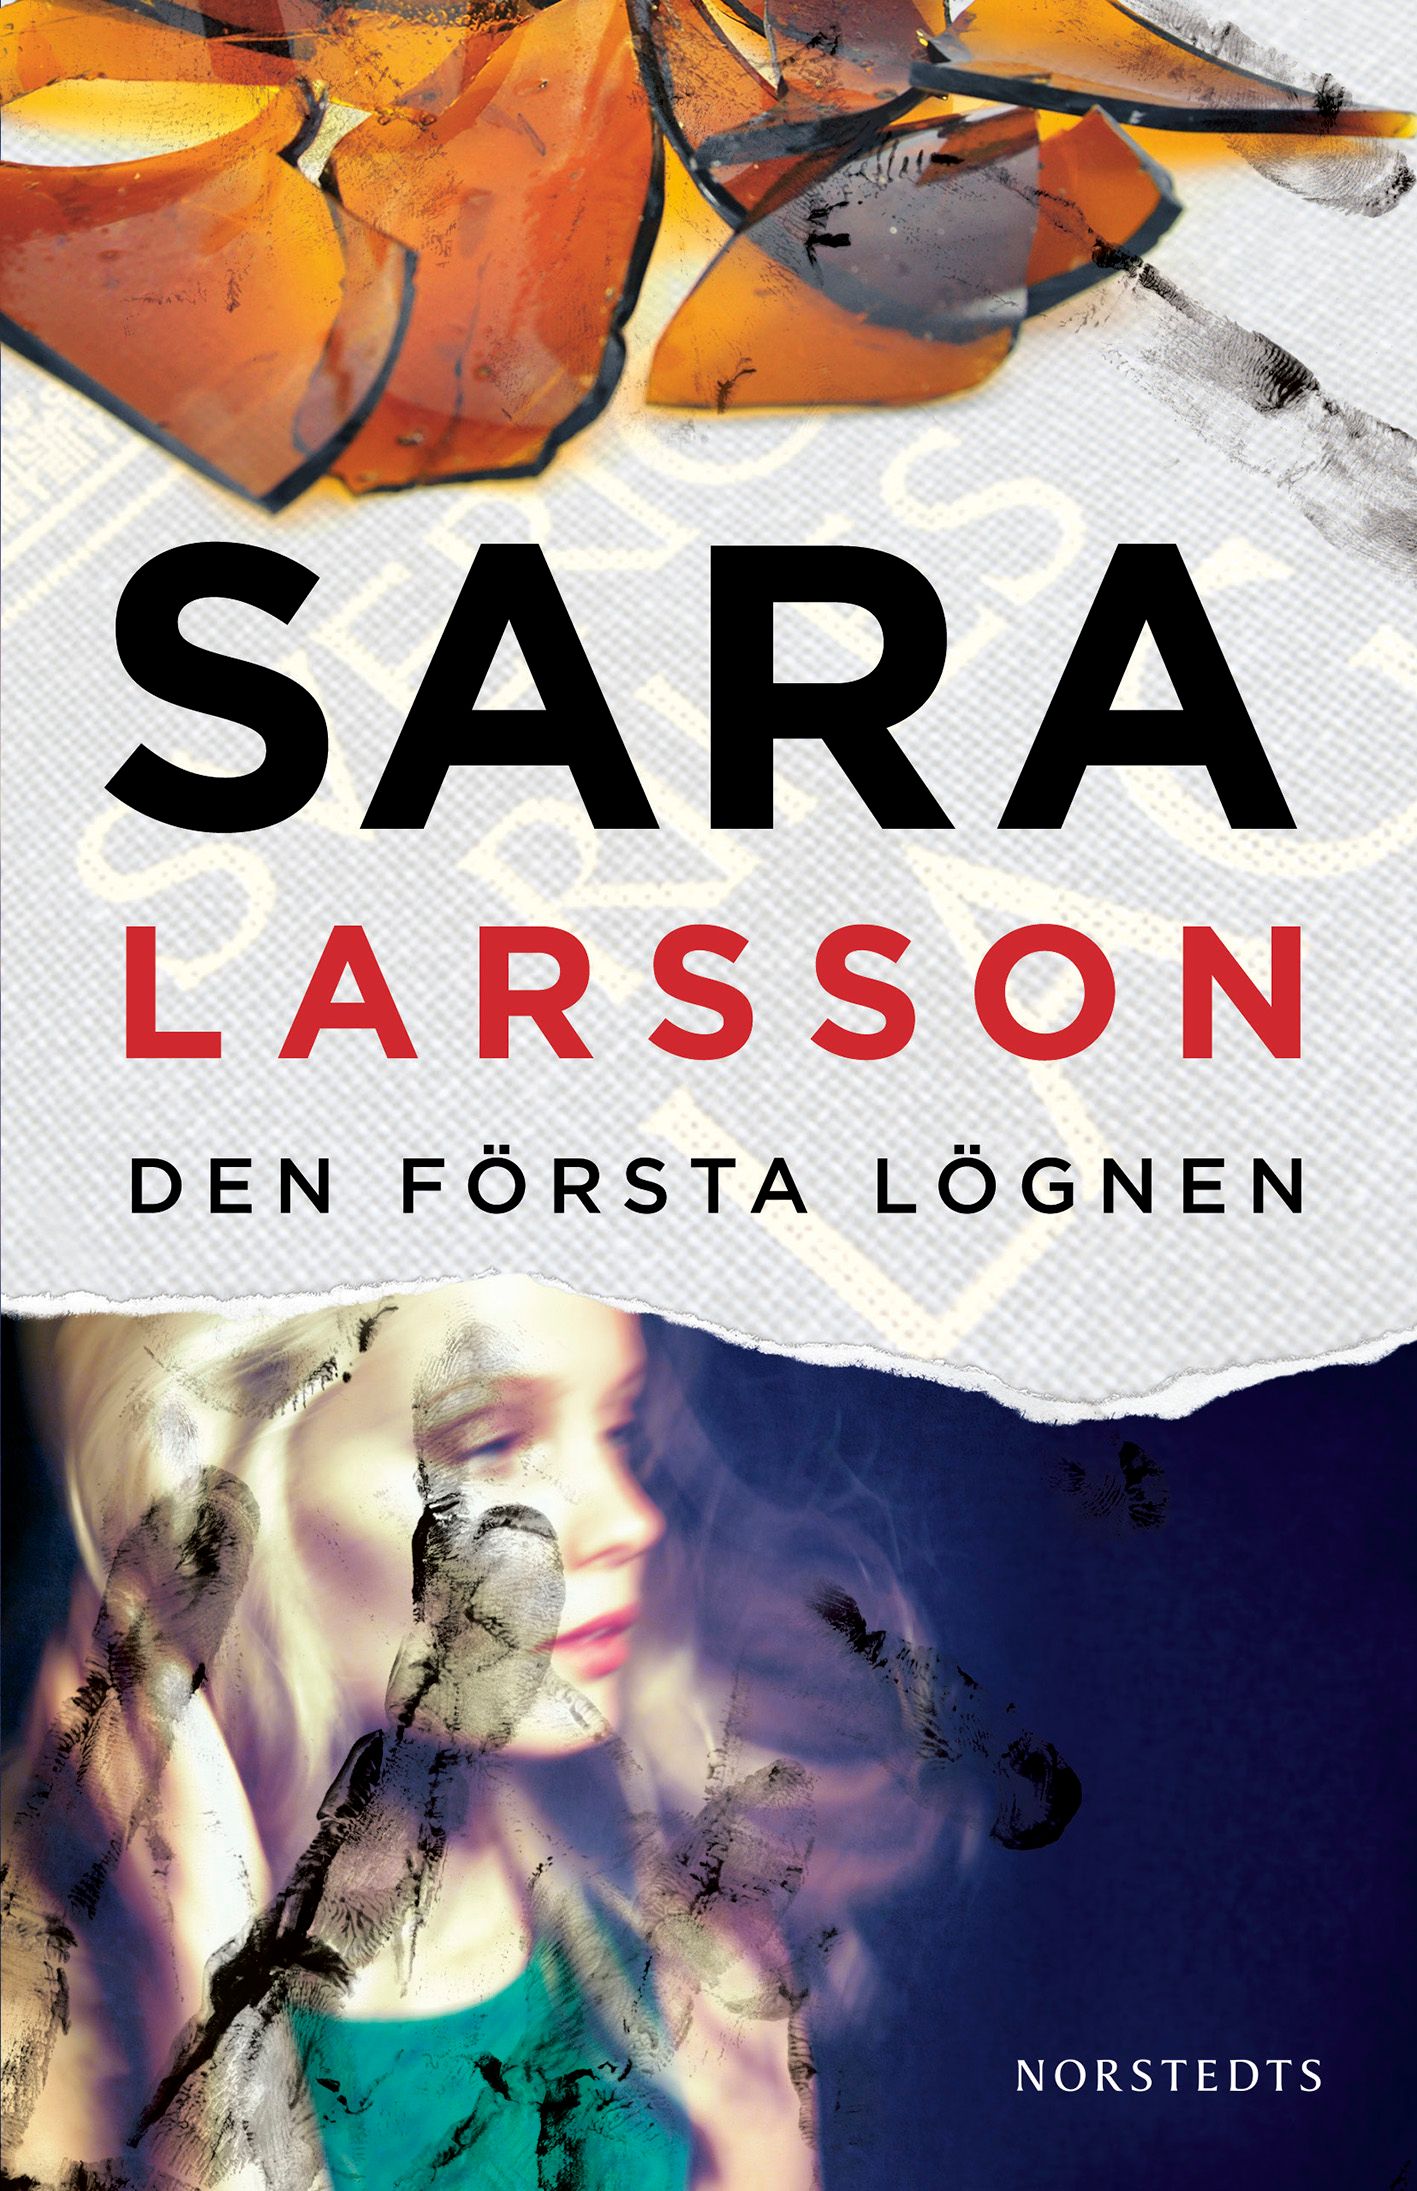 Den första lögnen, e-bog af Sara Larsson